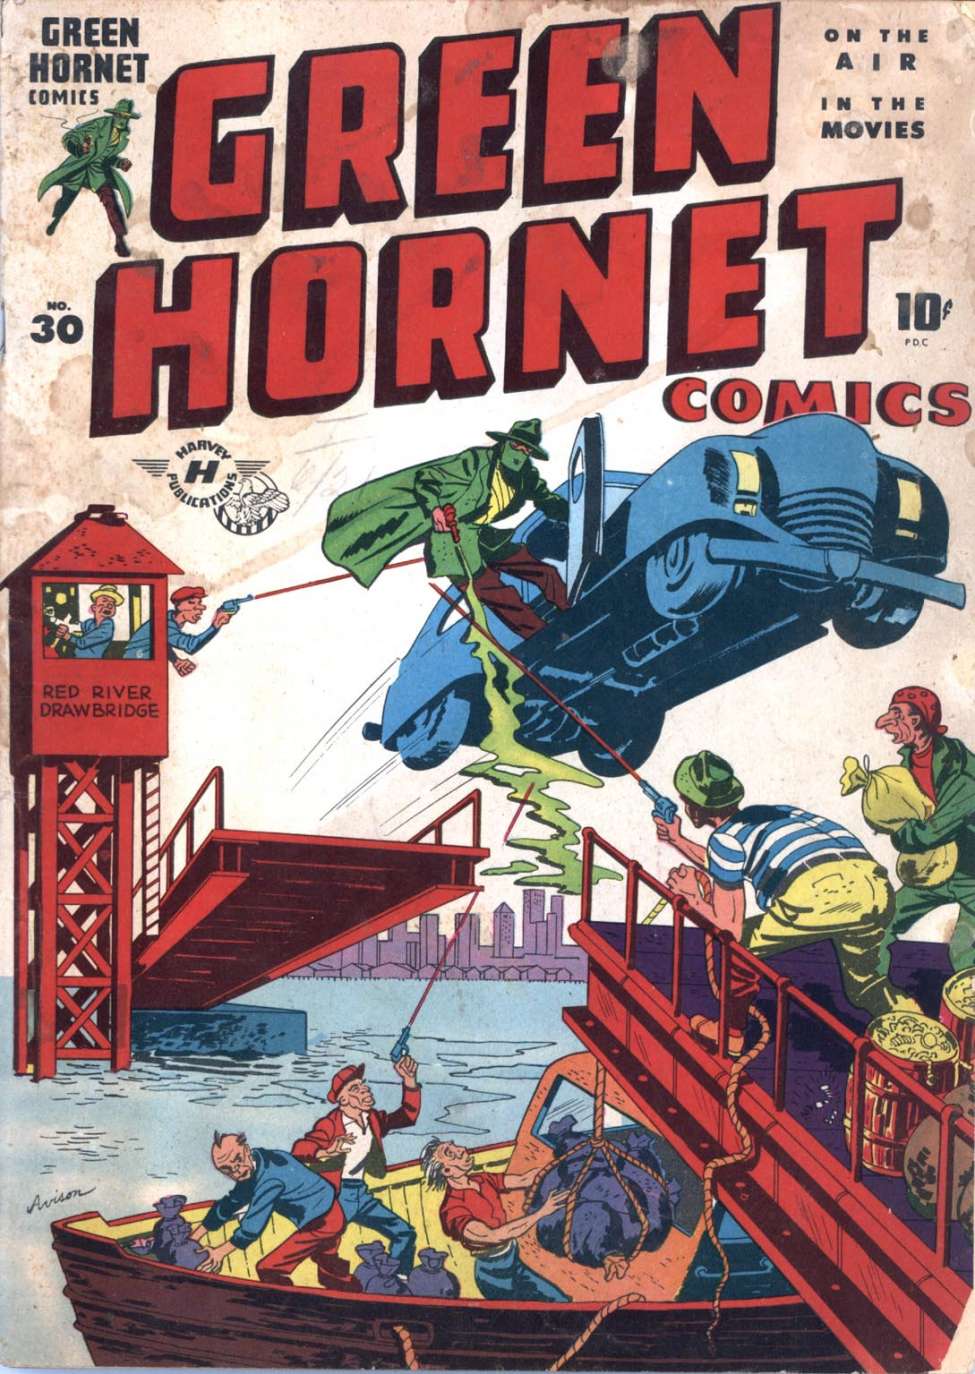 Comic Book Cover For Green Hornet Comics 30